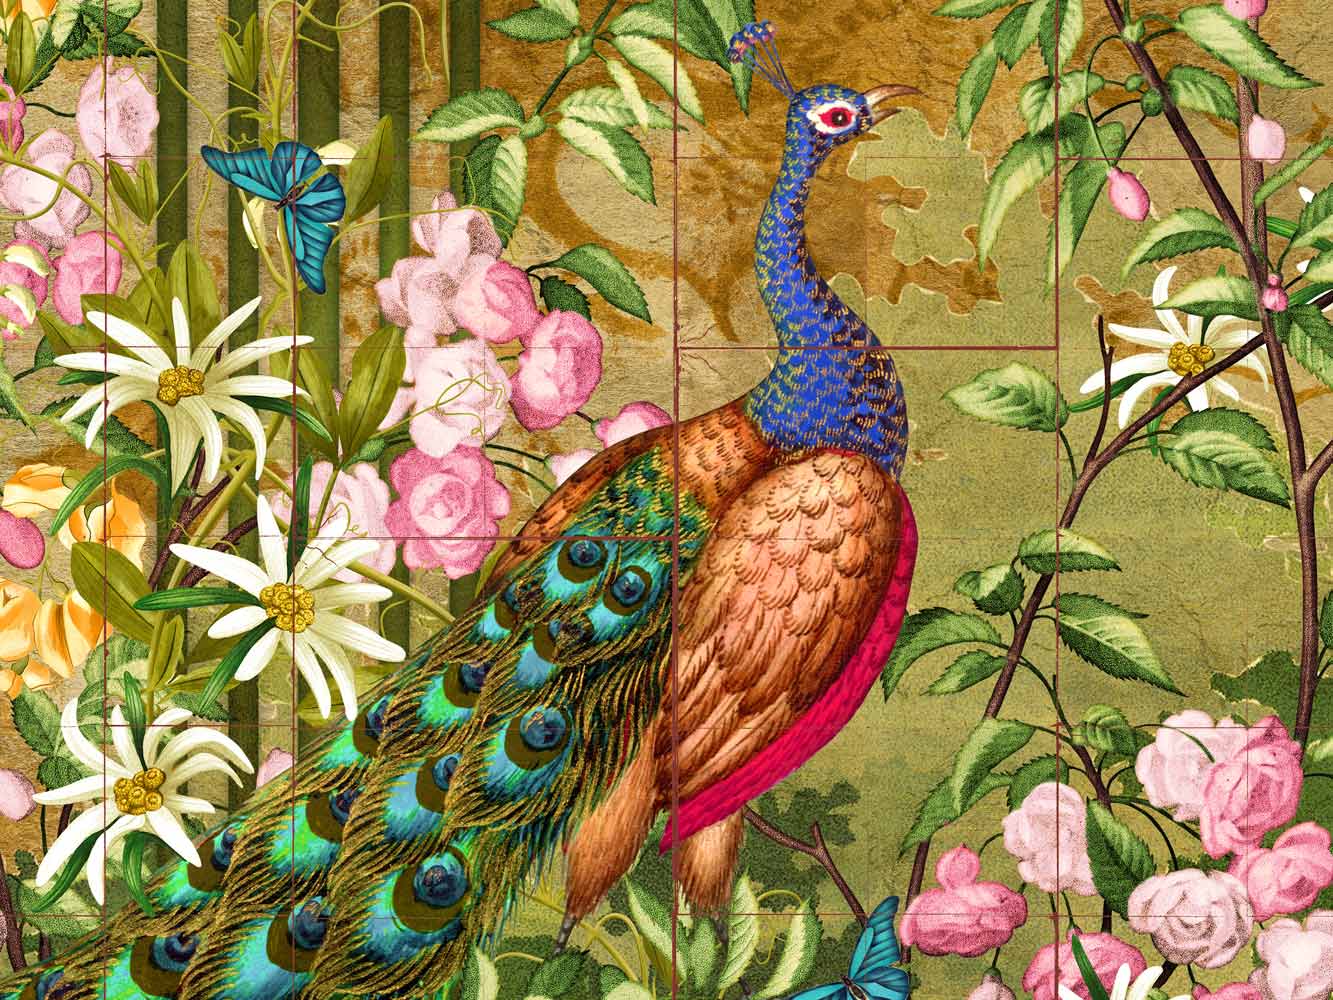 Peacock amongst foliage in the Pergola wallpaper design